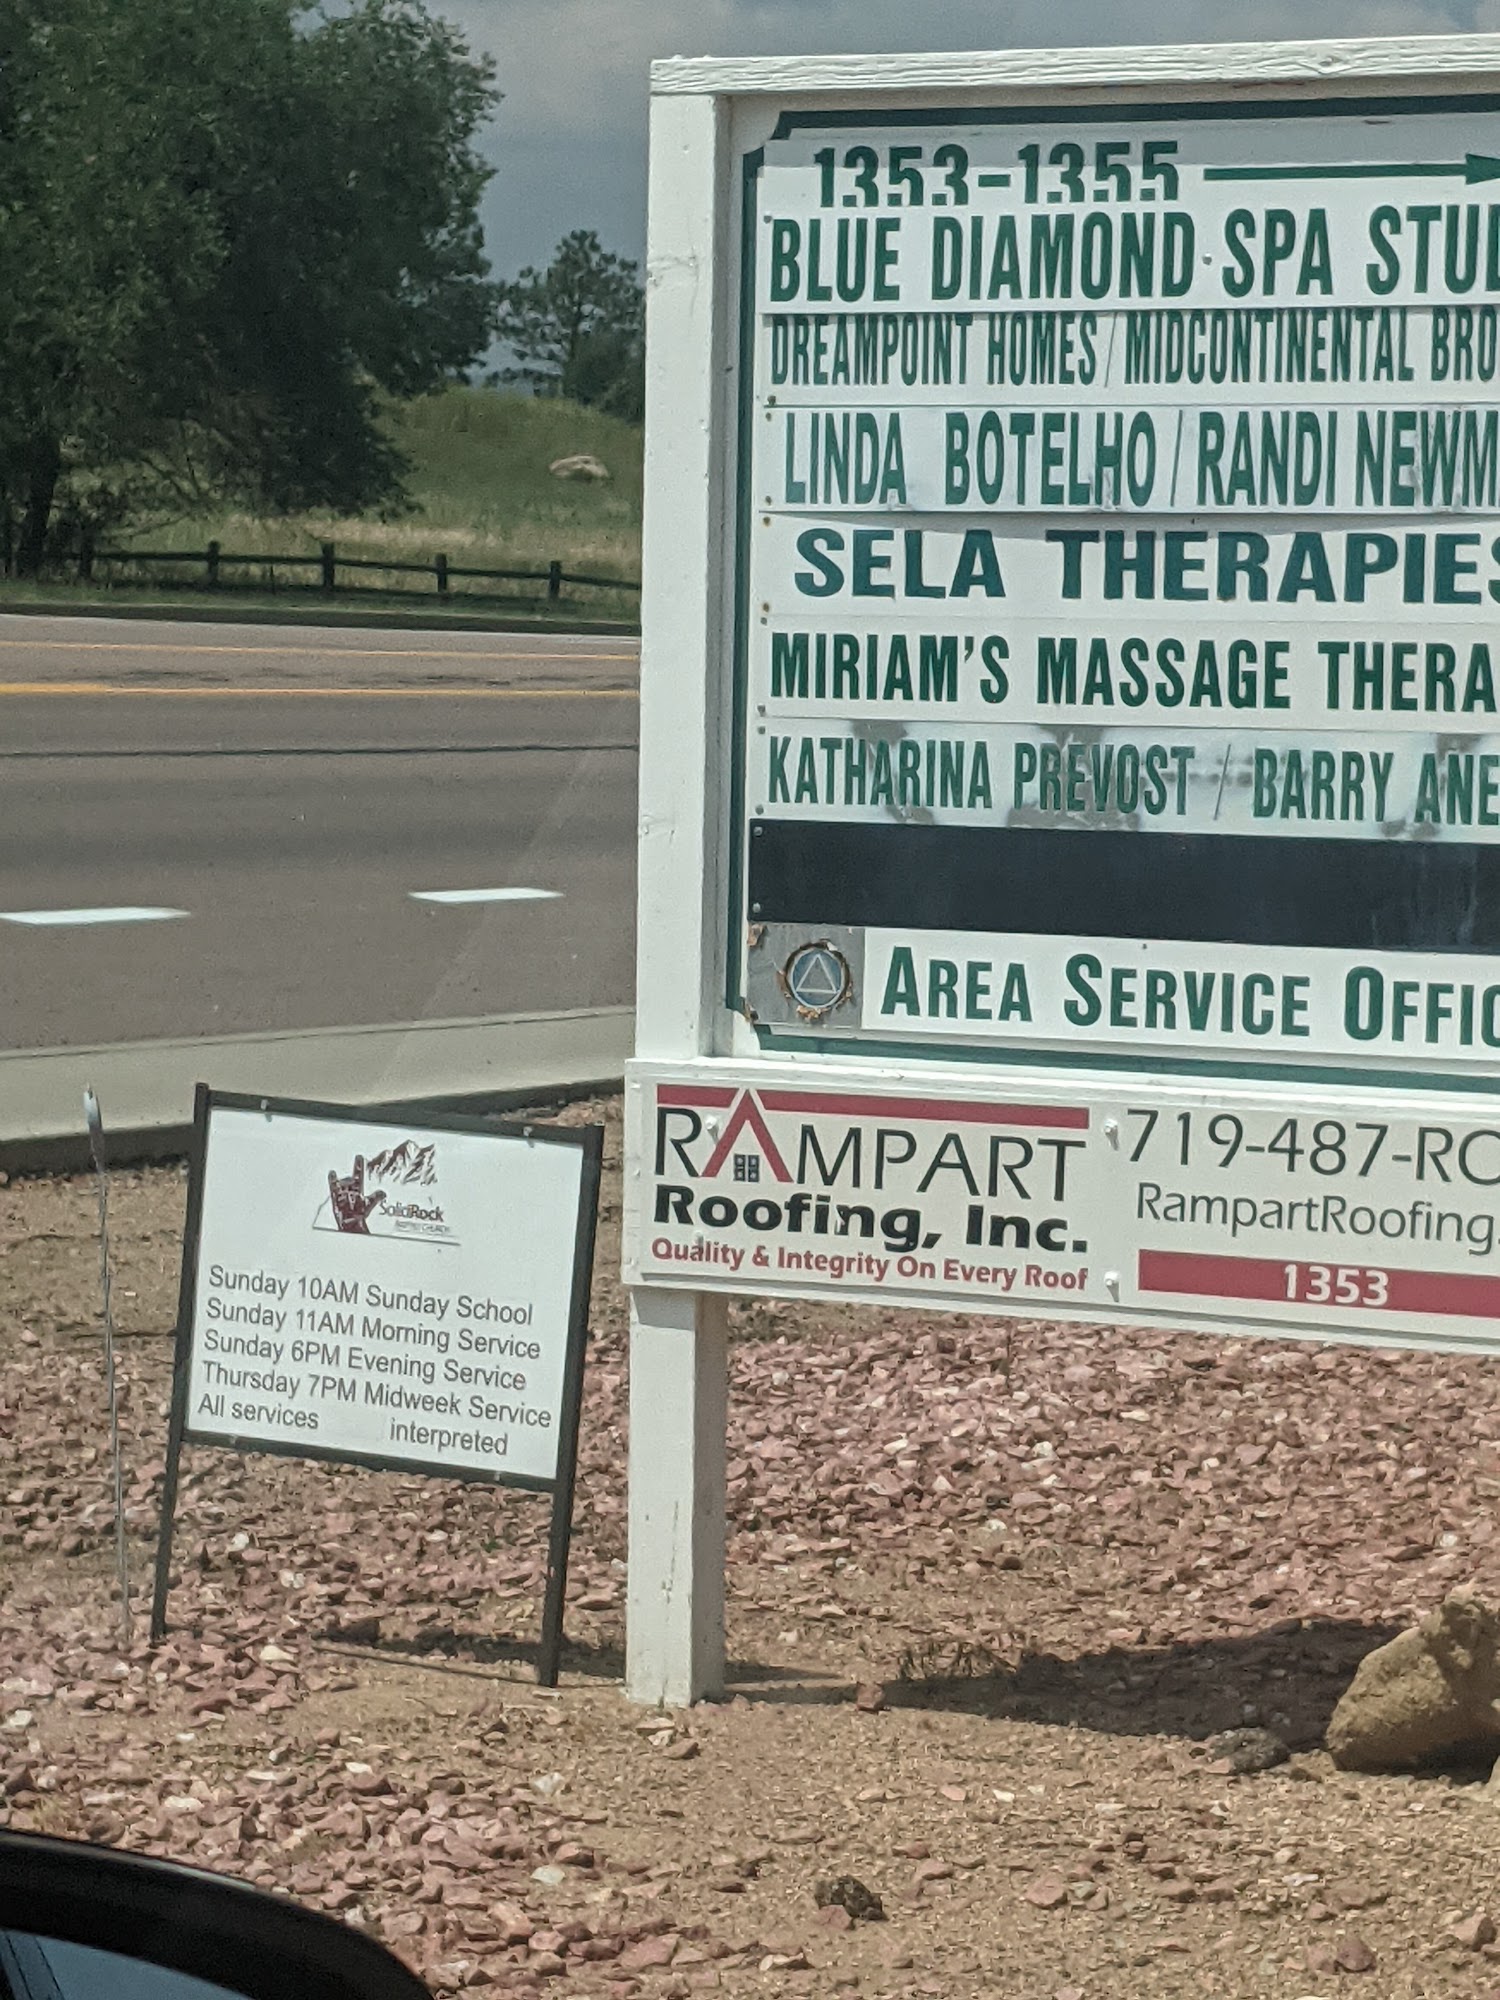 Avant Massage Therapy 103 S Main St, Fountain Colorado 80817